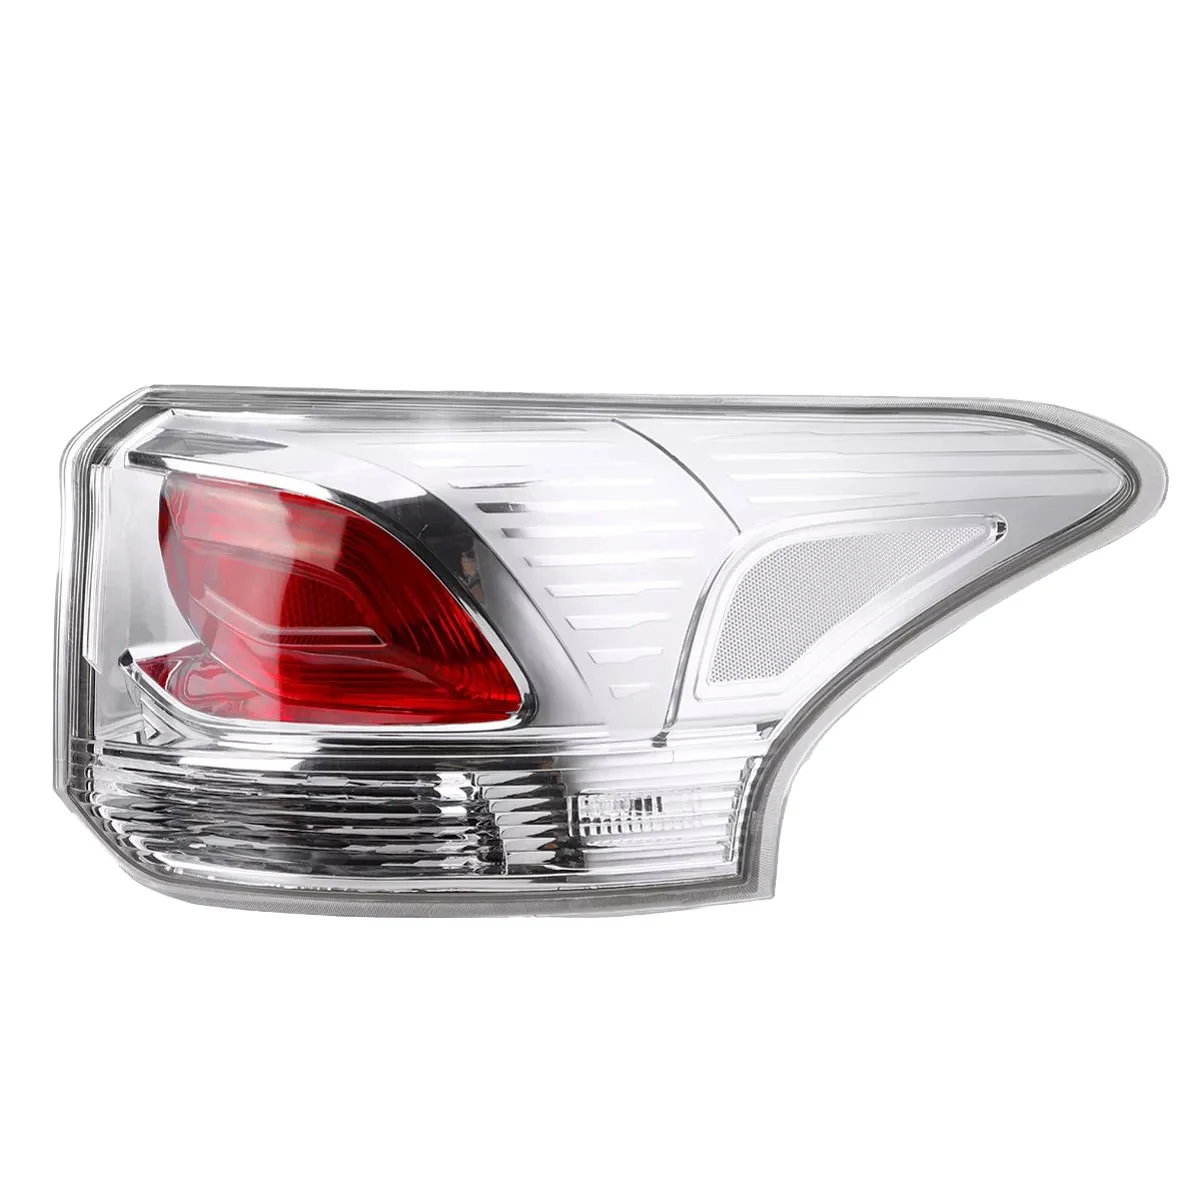 

Car Tail Lamp Rear Brake Light Turn Signal Lamp for Mitsubishi Outlander 2013 2014 2015 8330A787 8330A788 Right